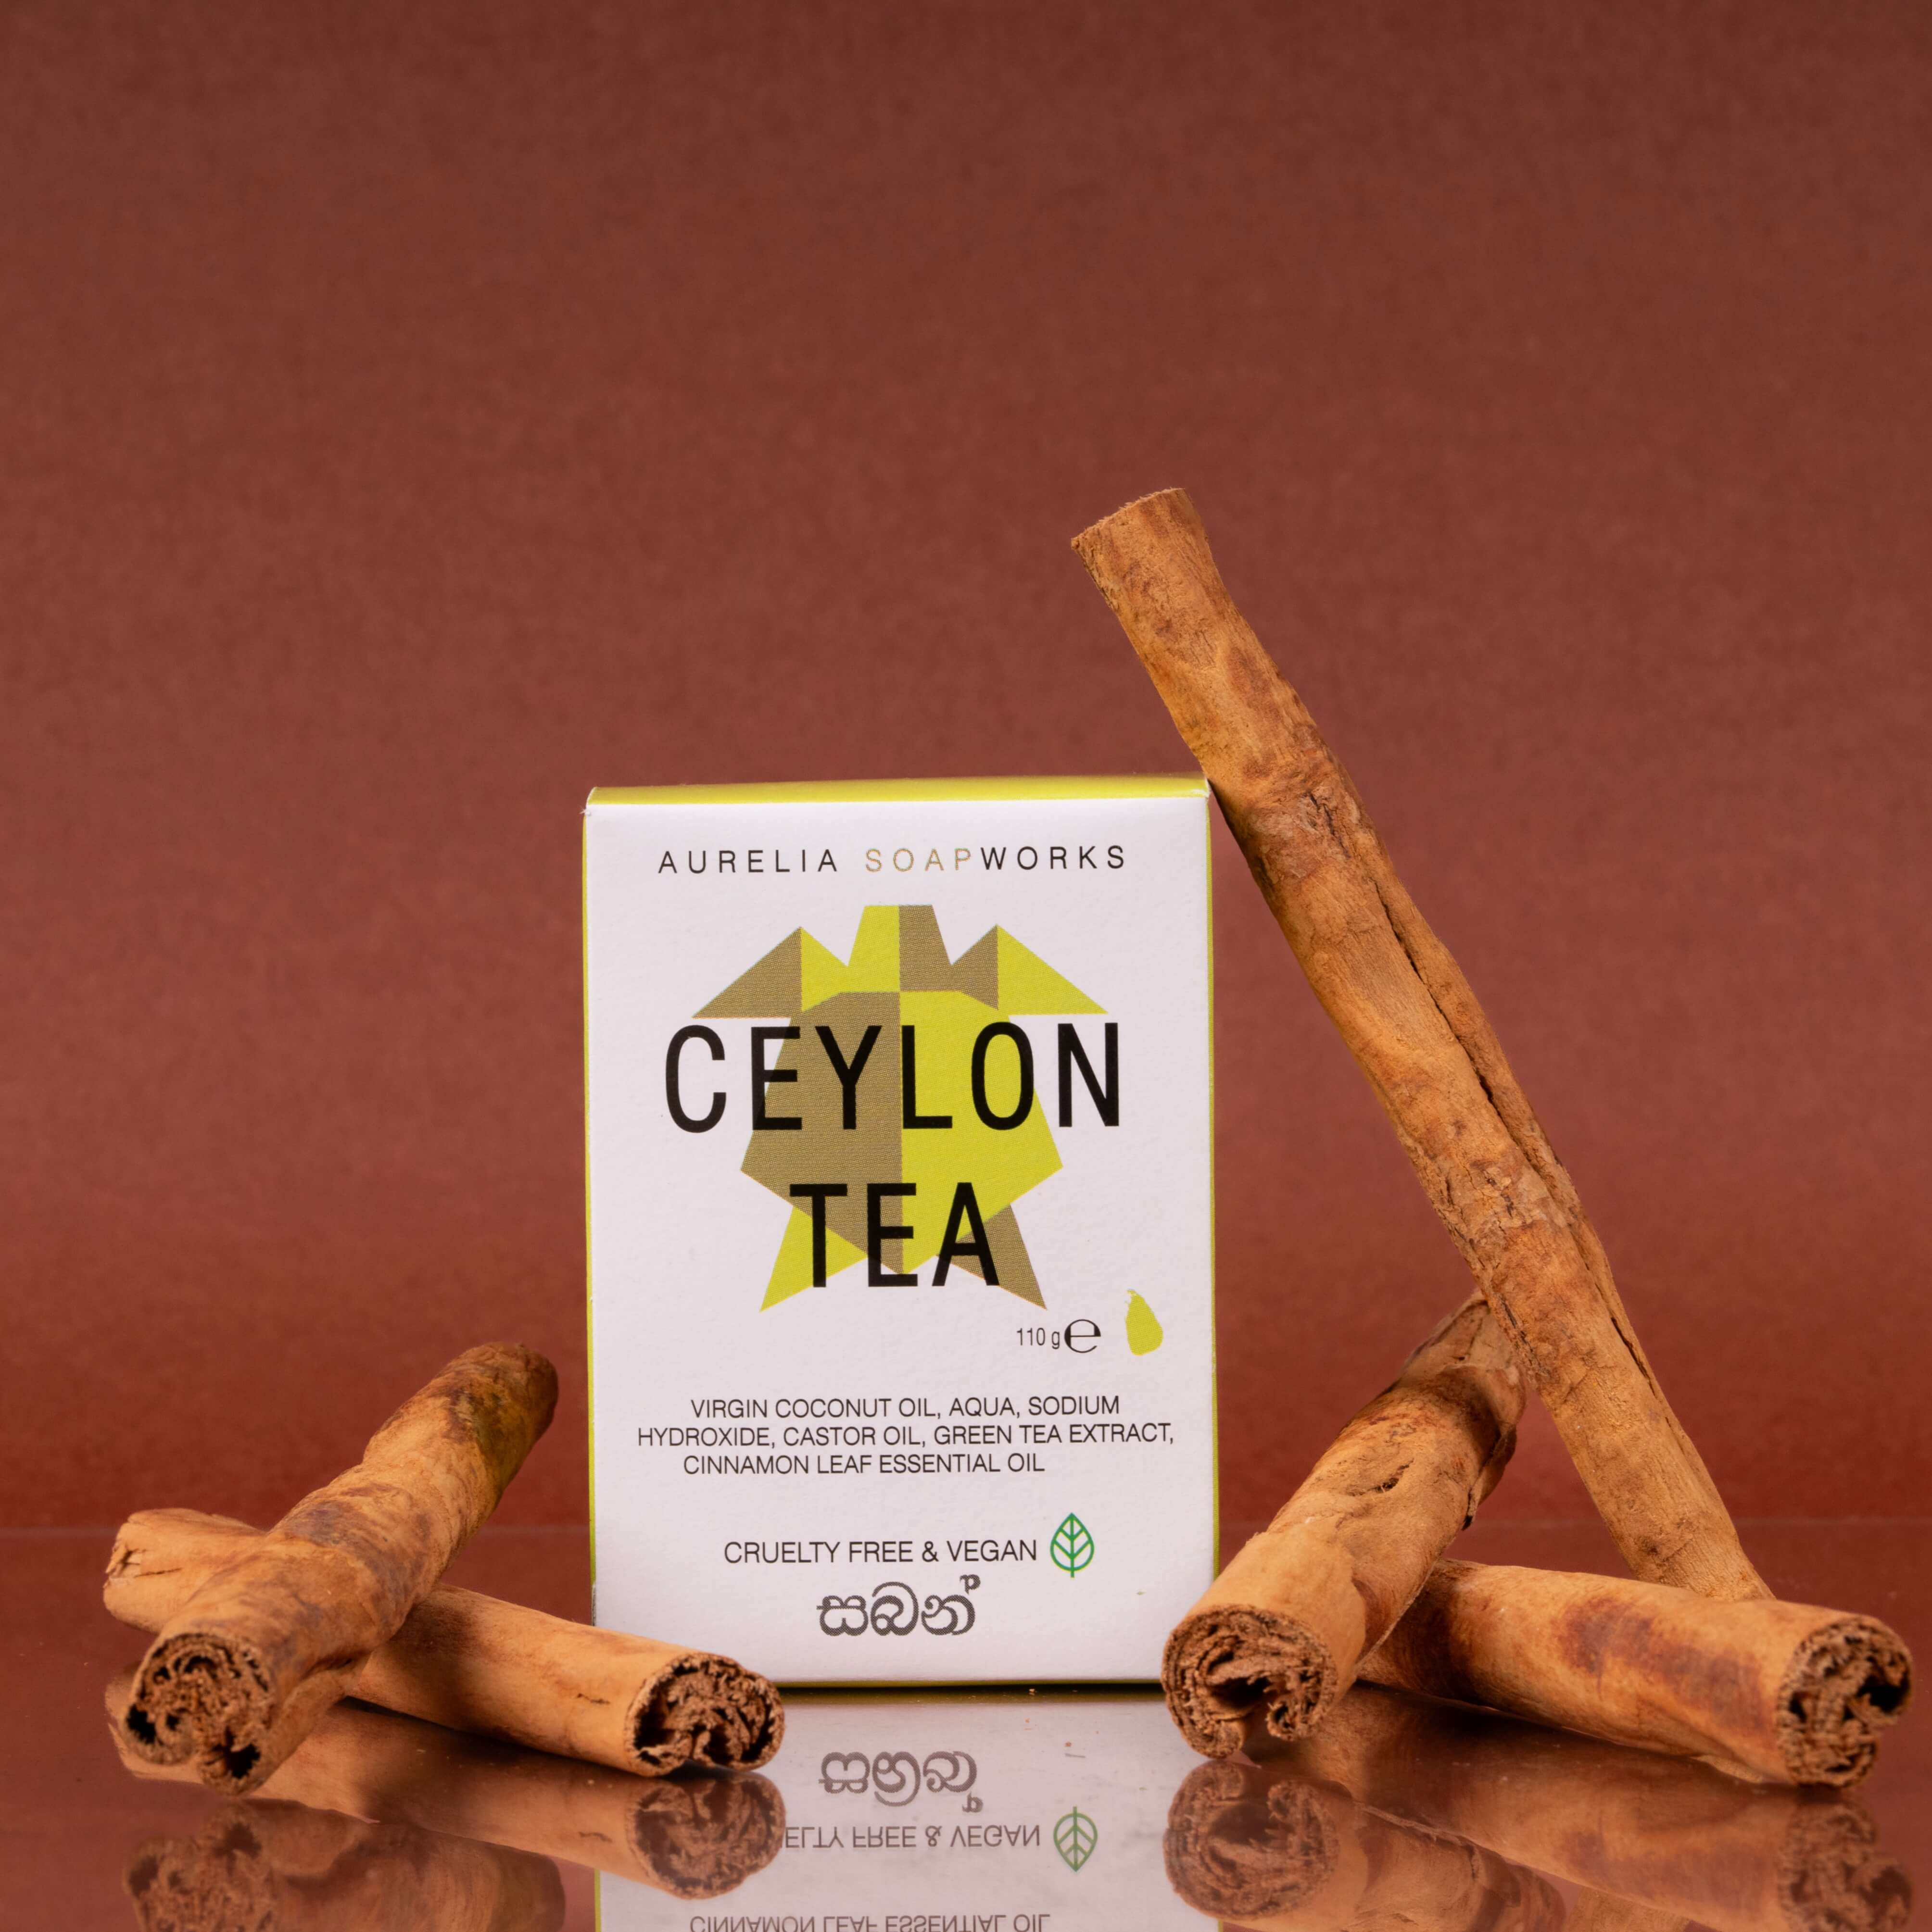 Ceylon tea bath soap